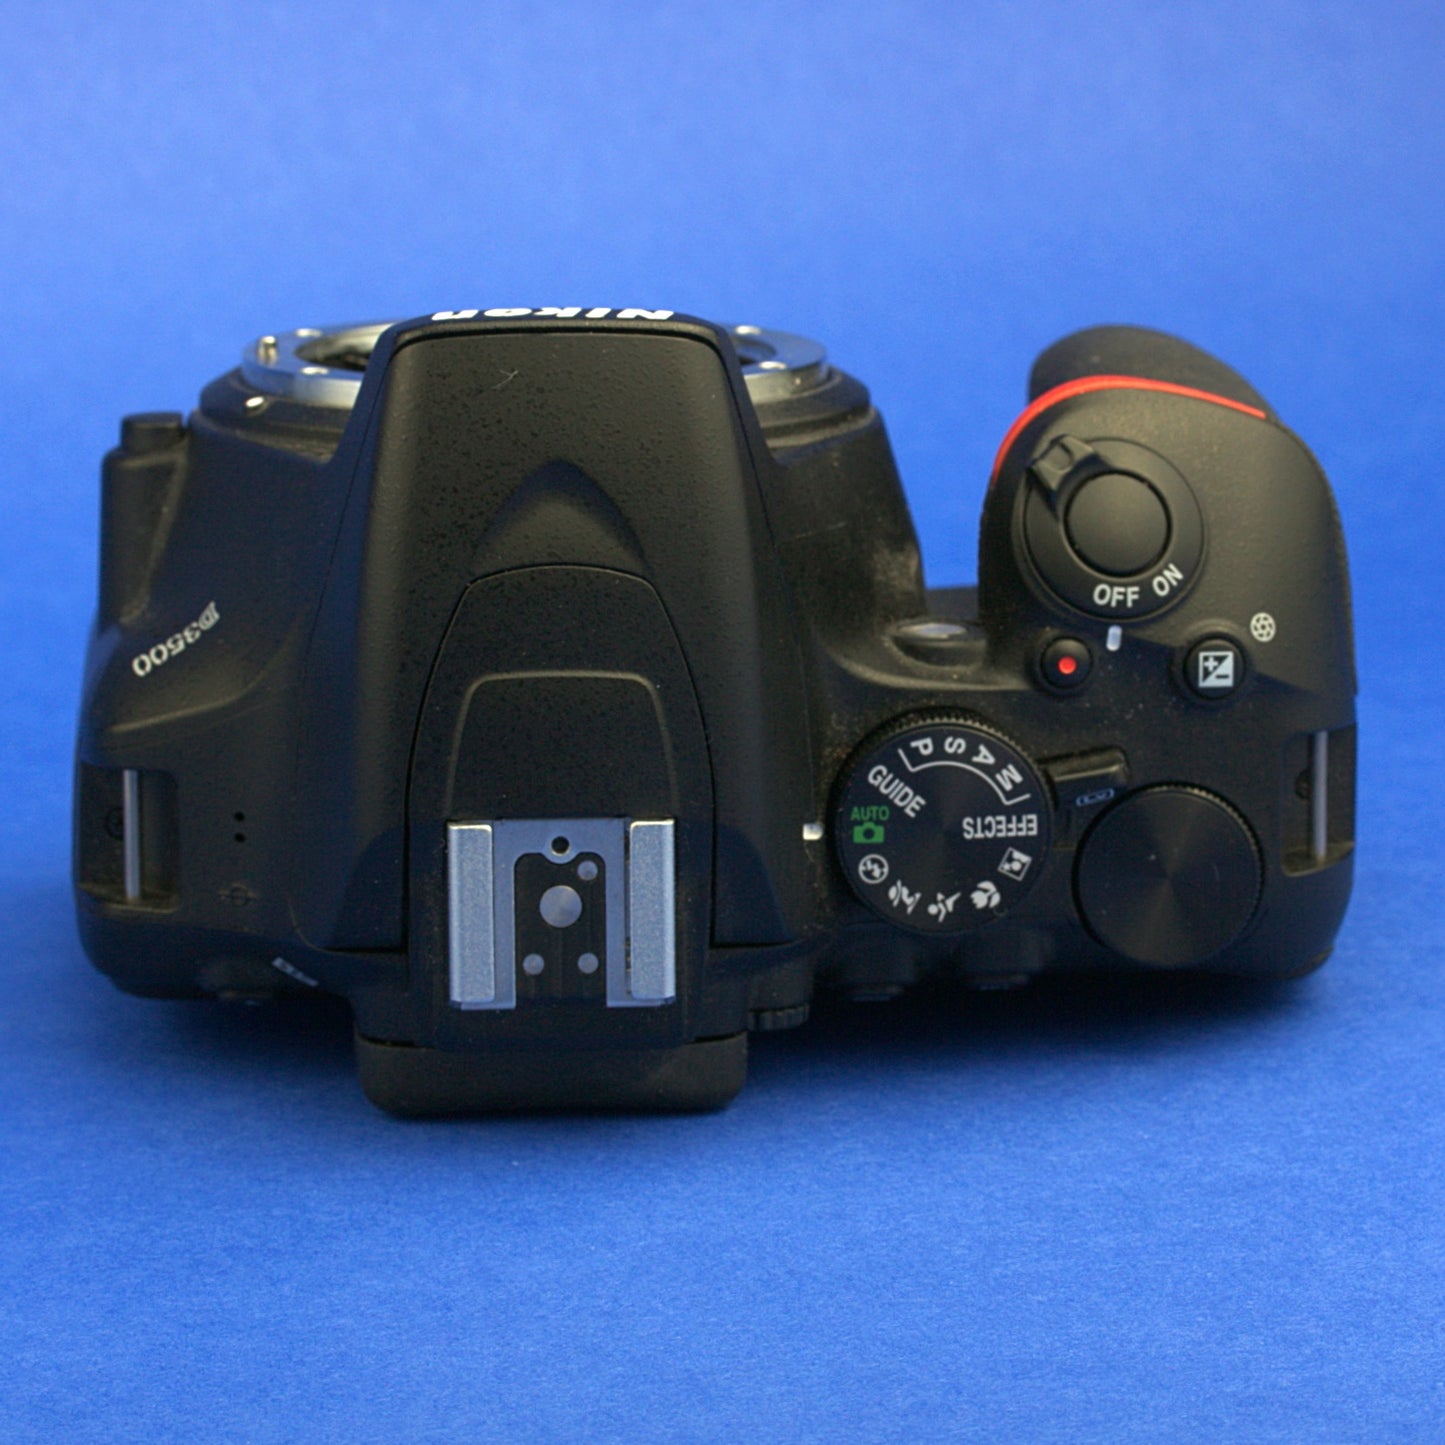 Nikon D3500 Digital Camera Body 3000 Actuations Near Mint Condition